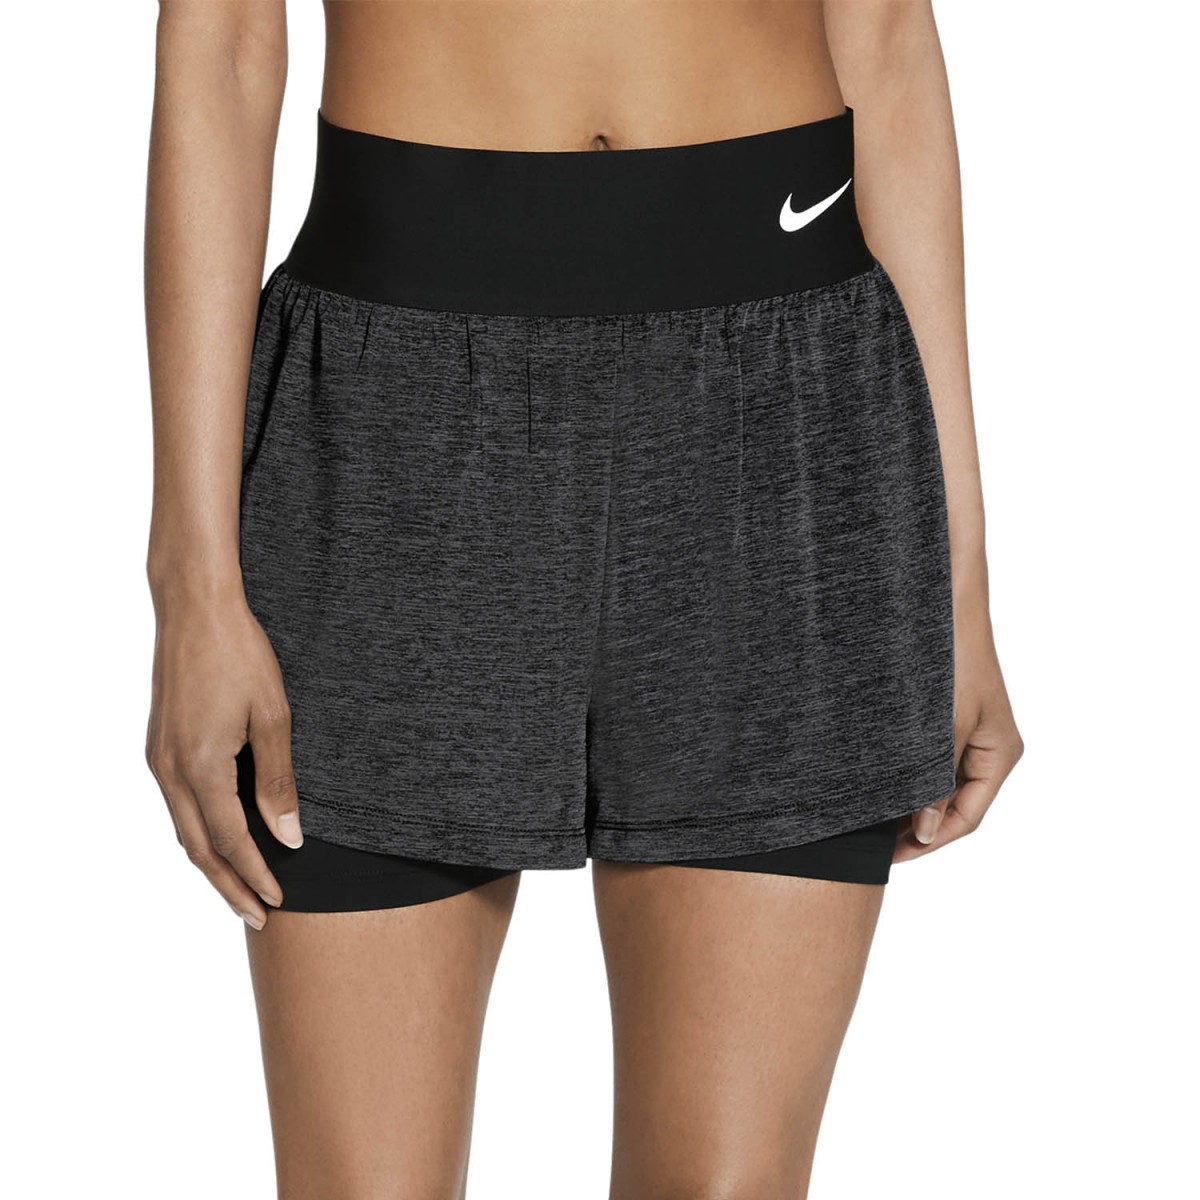 Теннисные шорты женские Nike Court Advantage Short black/black heather/black/white